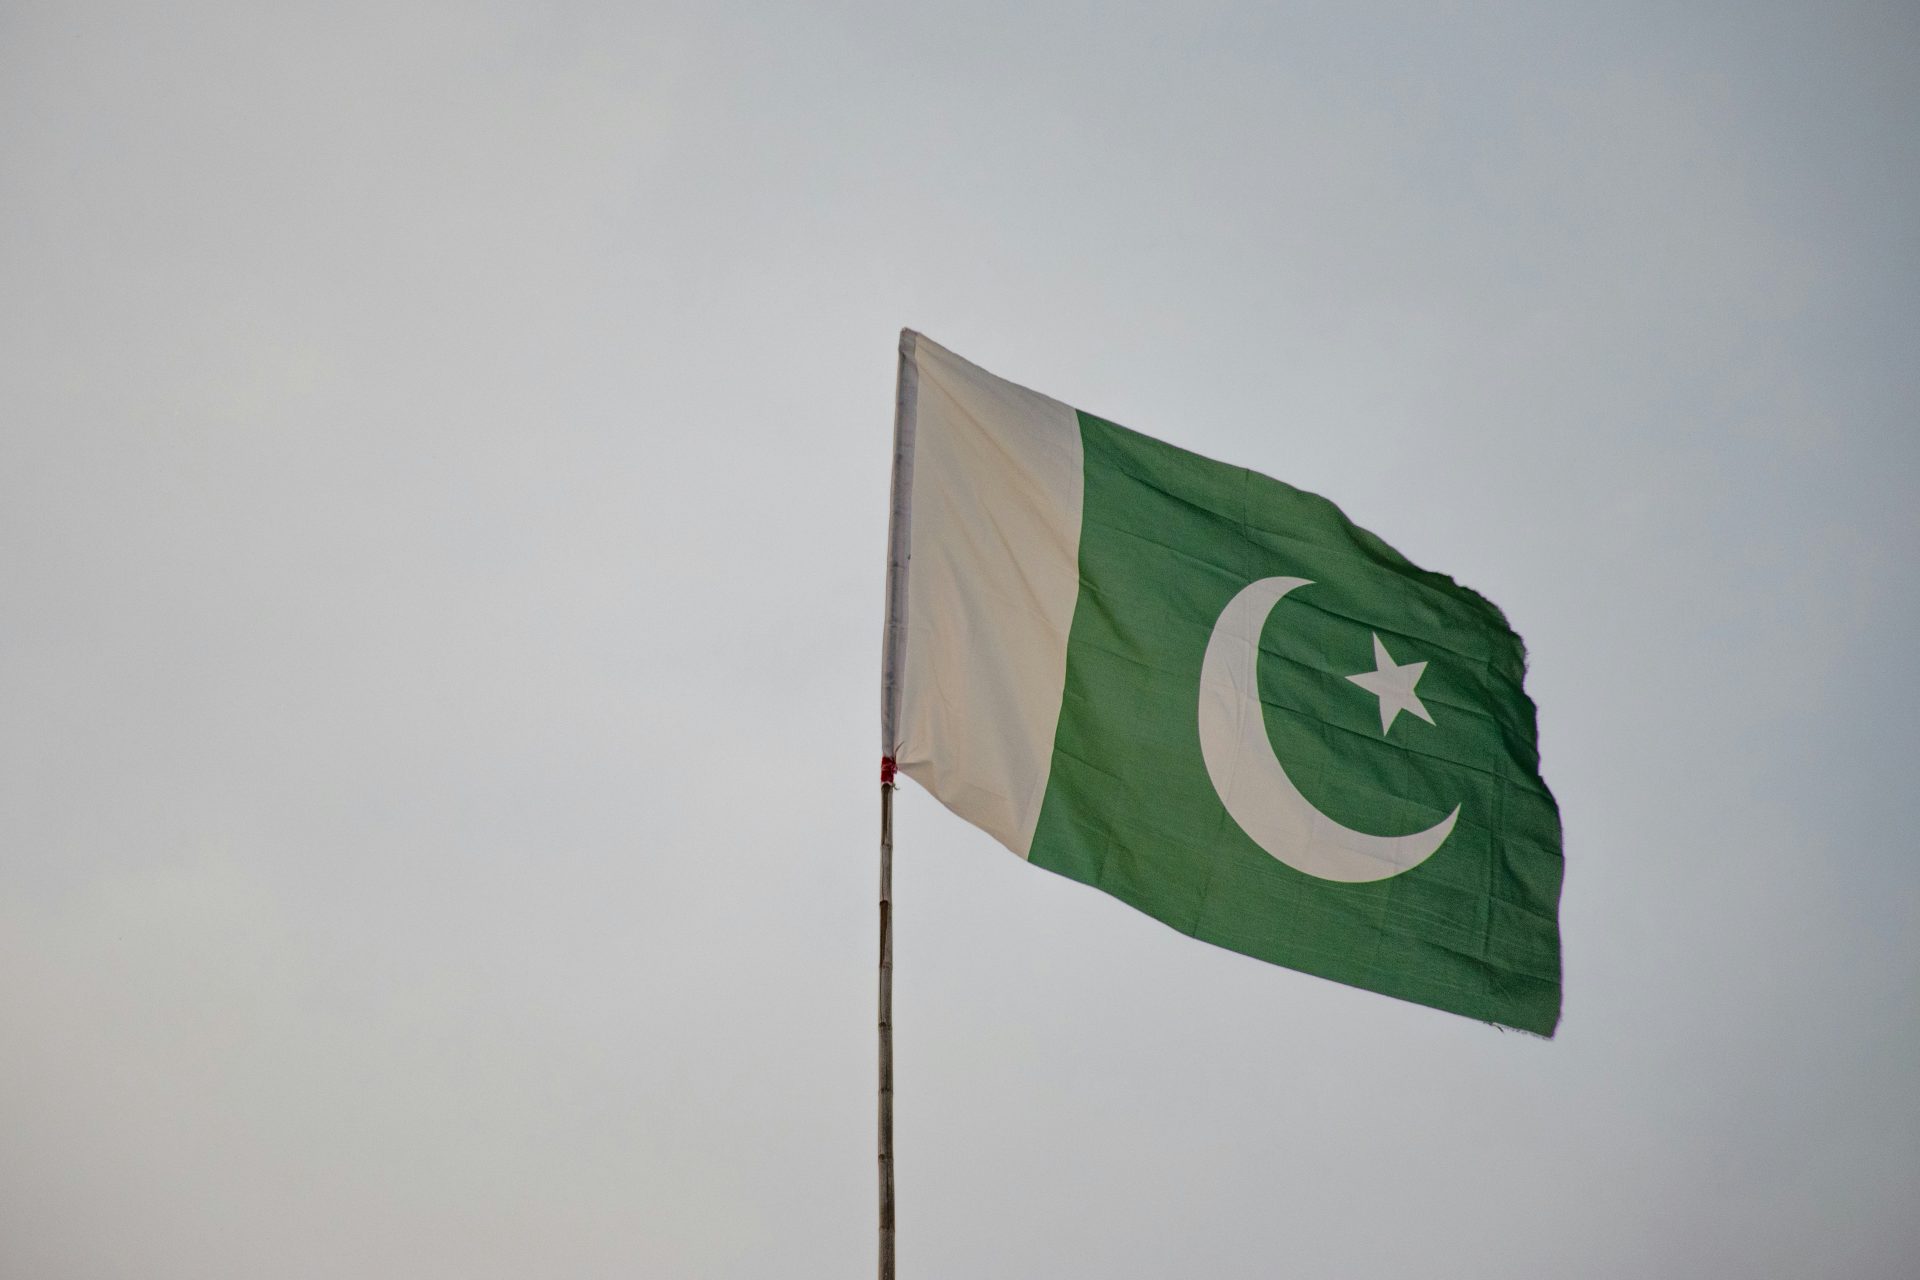 4. Pakistan